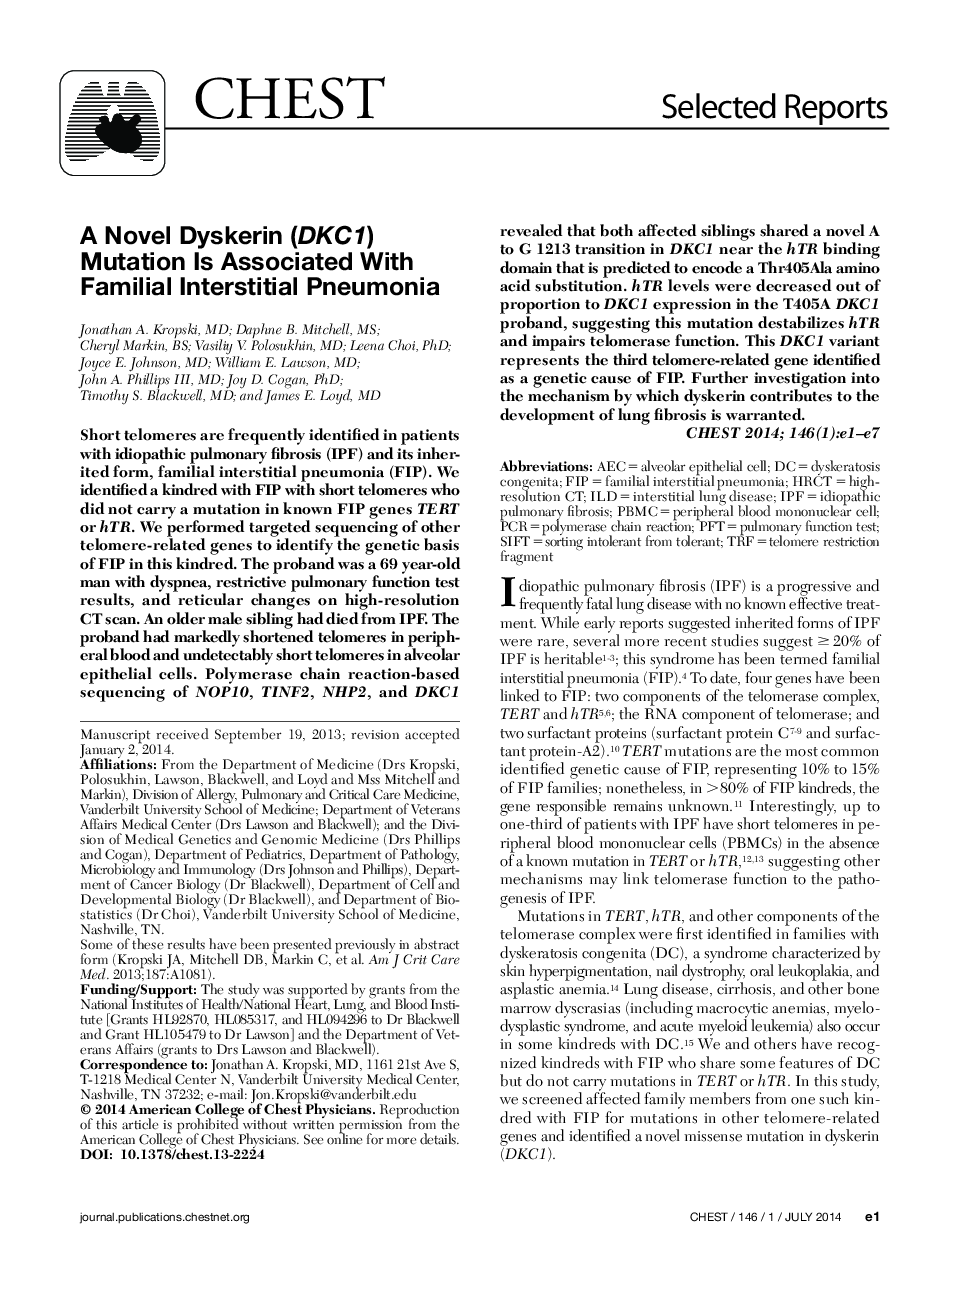 A Novel Dyskerin (DKC1) Mutation Is Associated With Familial Interstitial Pneumonia